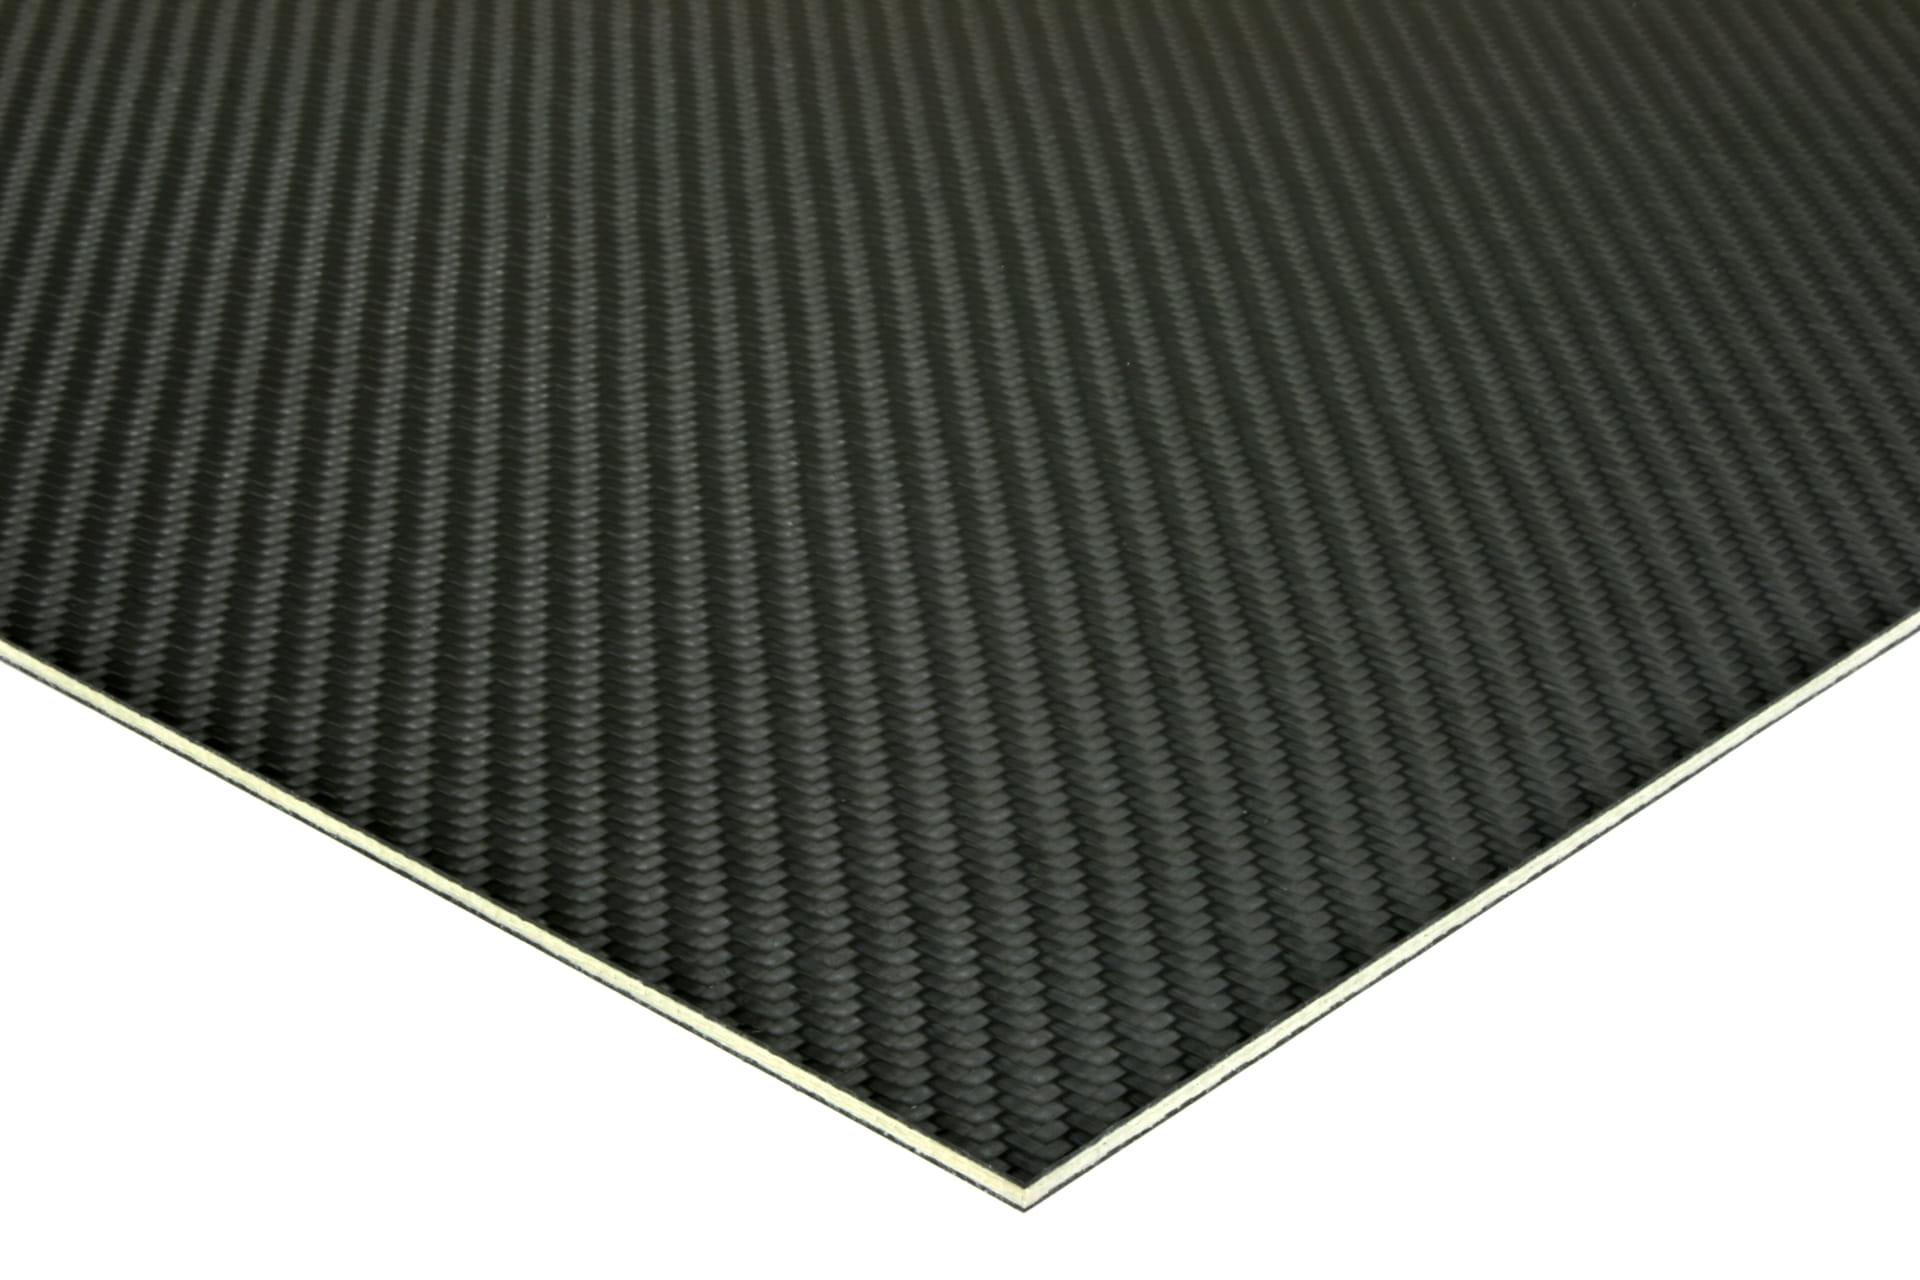 Kevlar + Carbon Fiber Hybrid Fabric